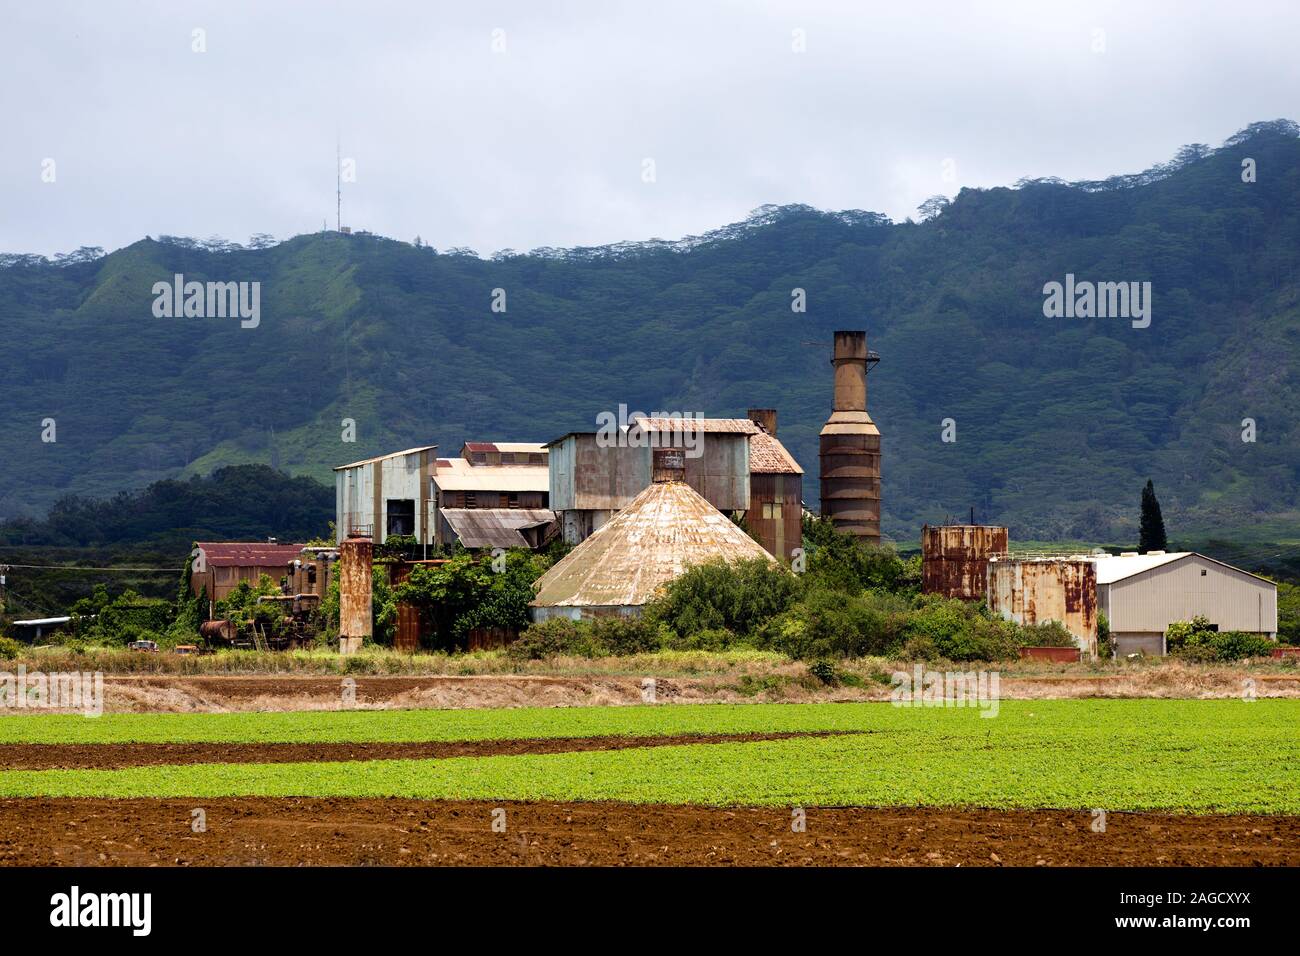 Old Sugar Mill of Koloa, located on the island of Kauai, Hawaii, USA Stock Photo